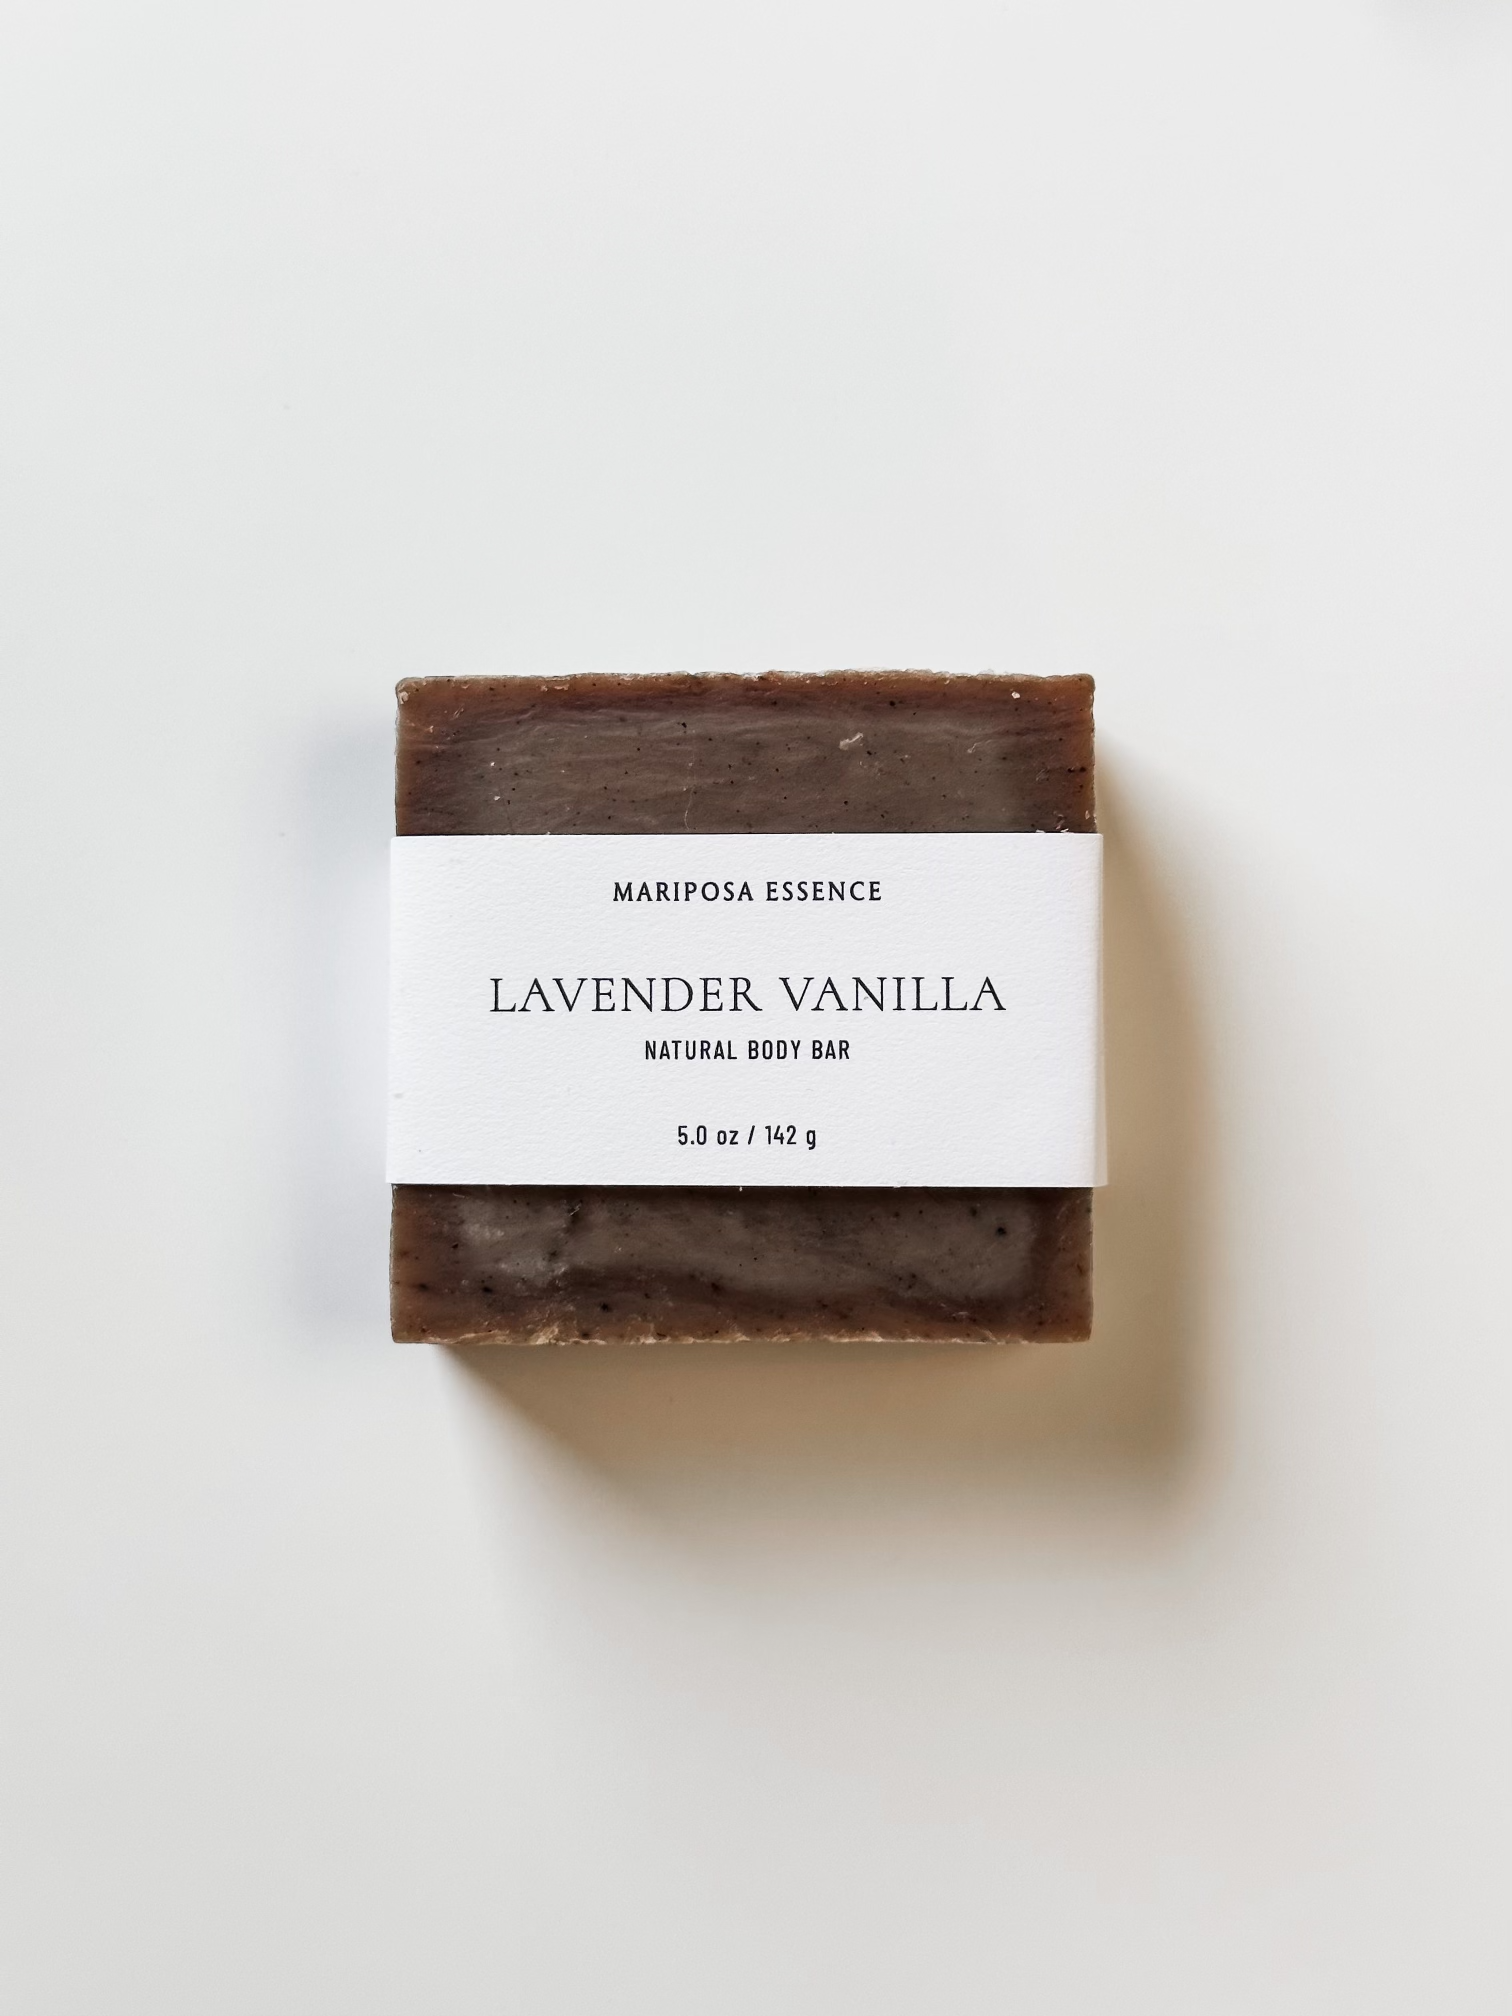 Lavender Vanilla body bar